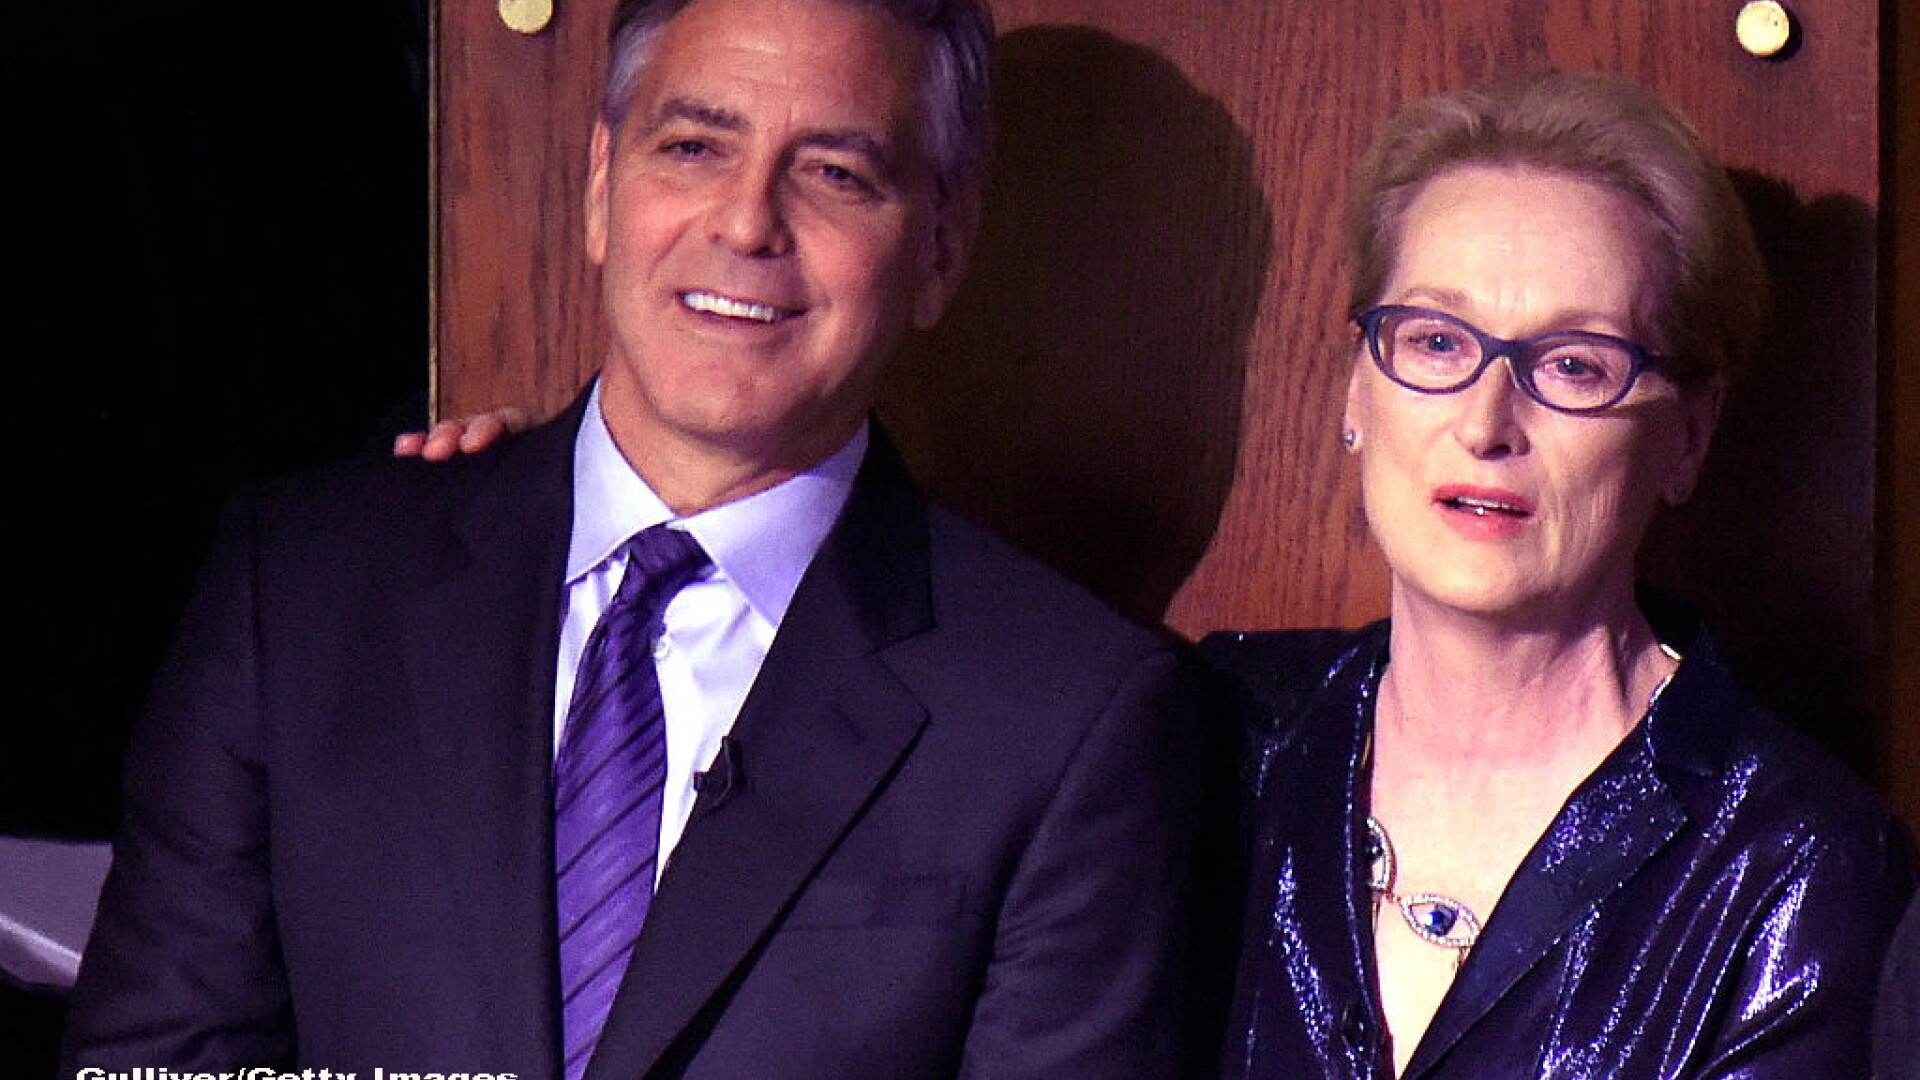 George Clooney, Meryl Streep